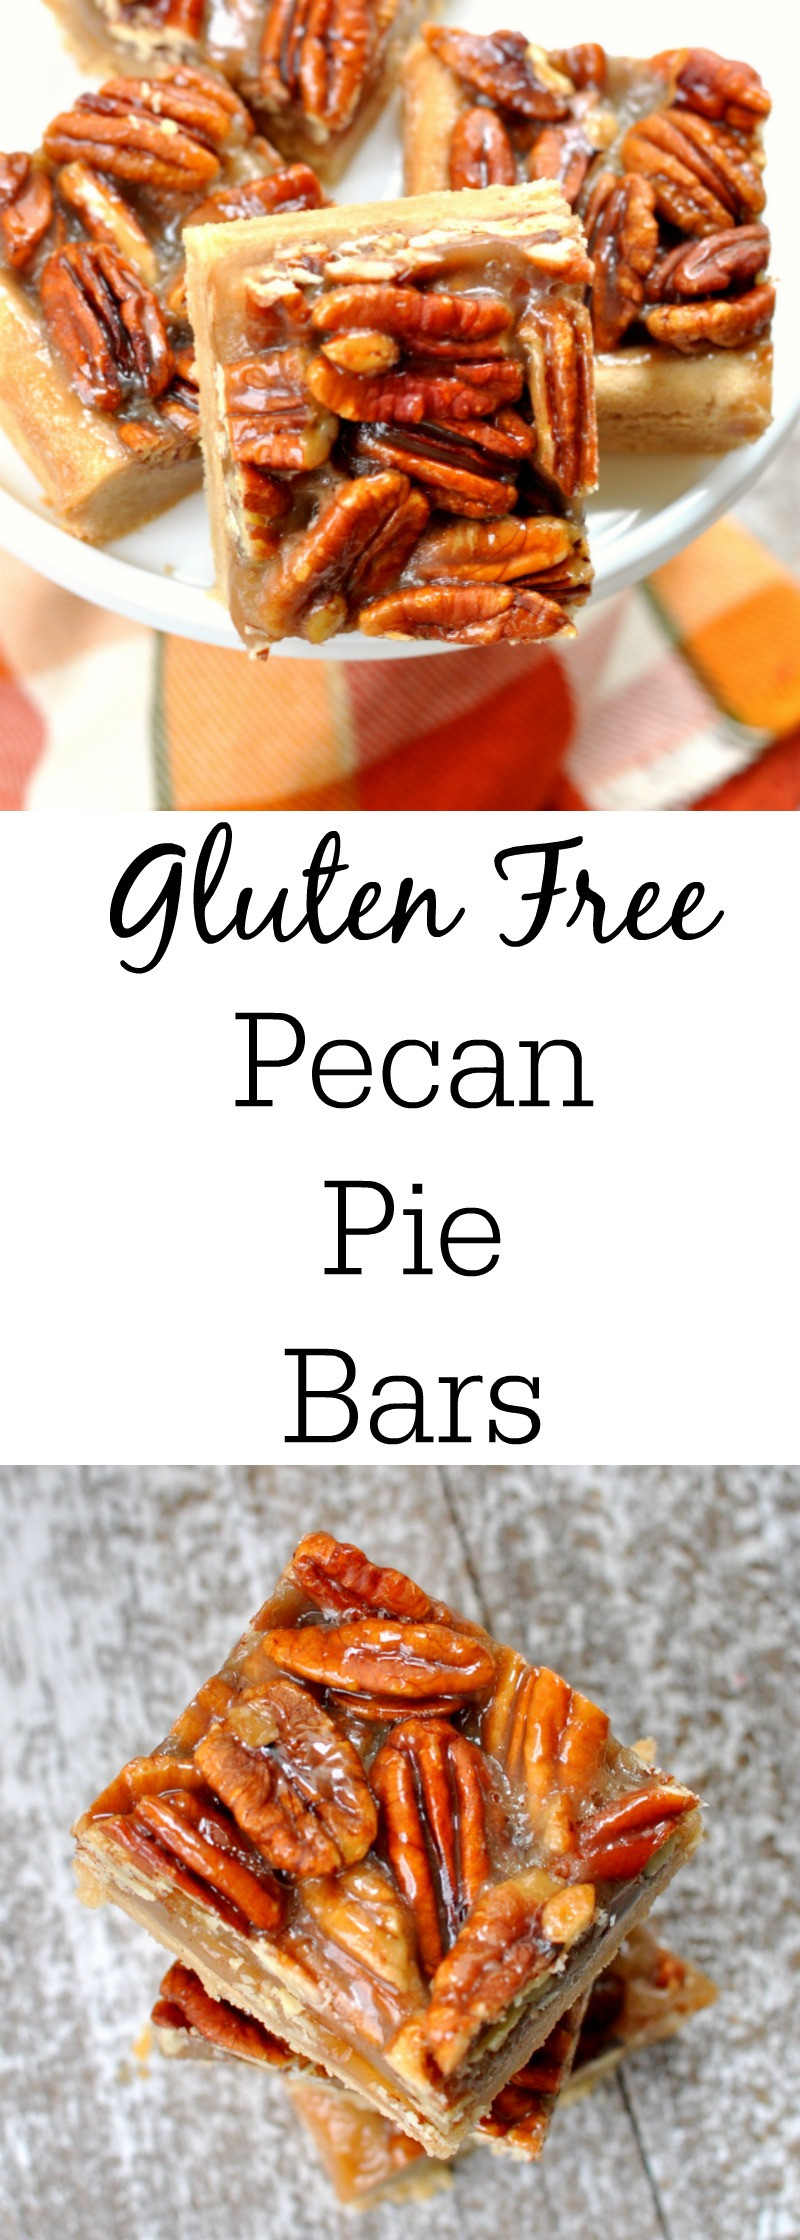 Gluten Free Pecan Pie
 Gluten Free Pecan Pie Bars The Best Pecan Pie Recipe Around